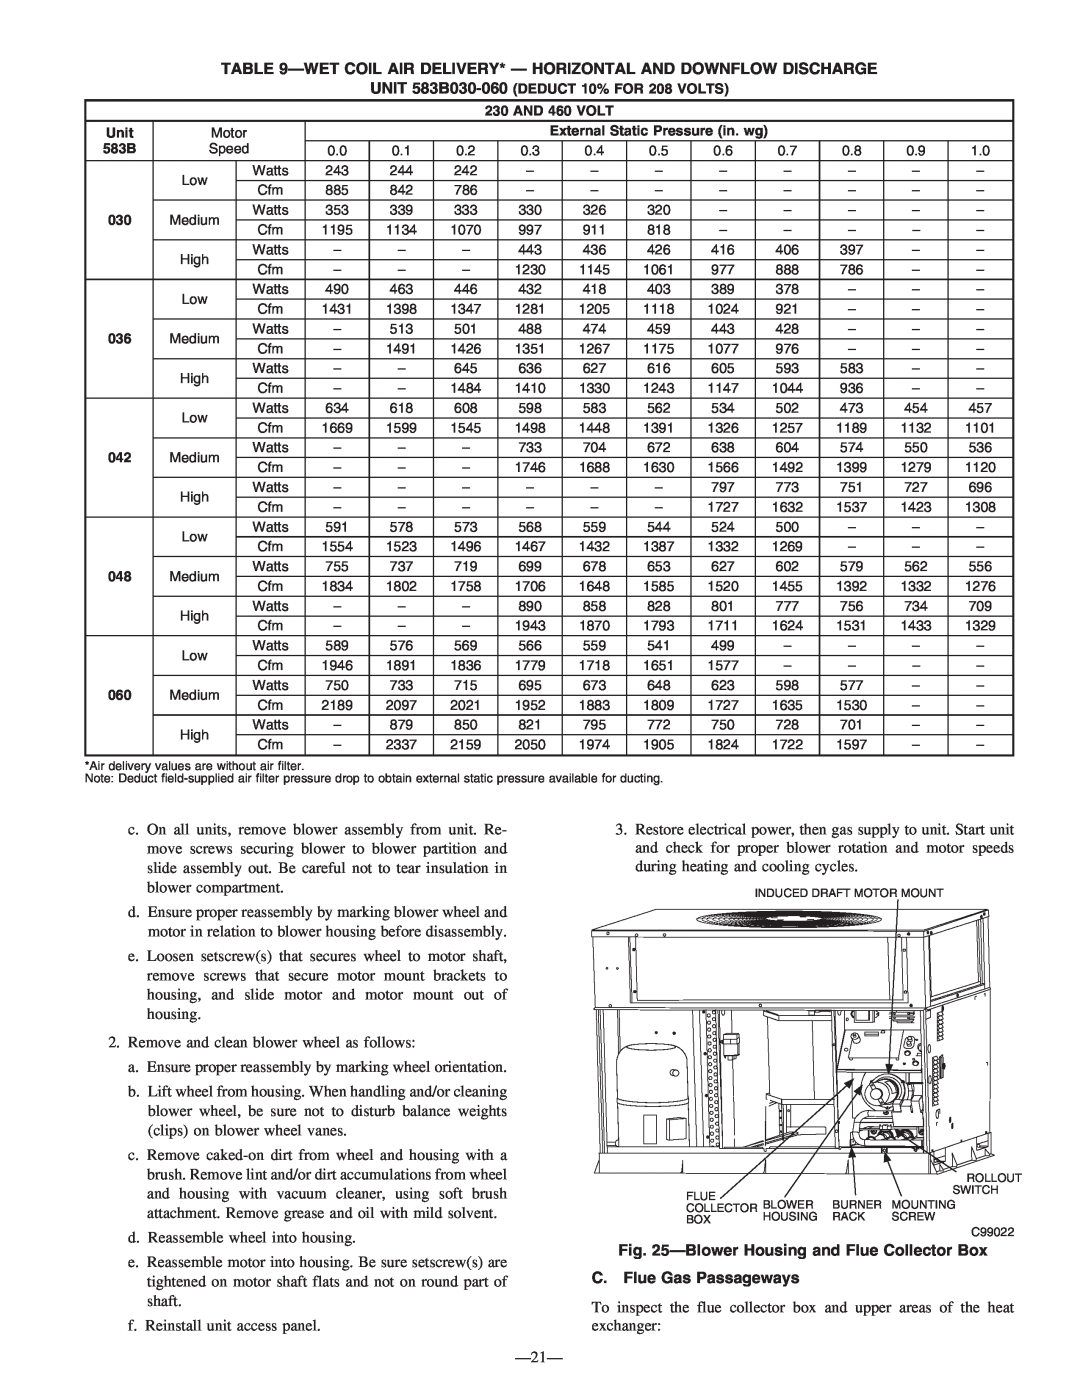 Bryant 583B instruction manual BlowerHousing and Flue Collector Box, C. Flue Gas Passageways 